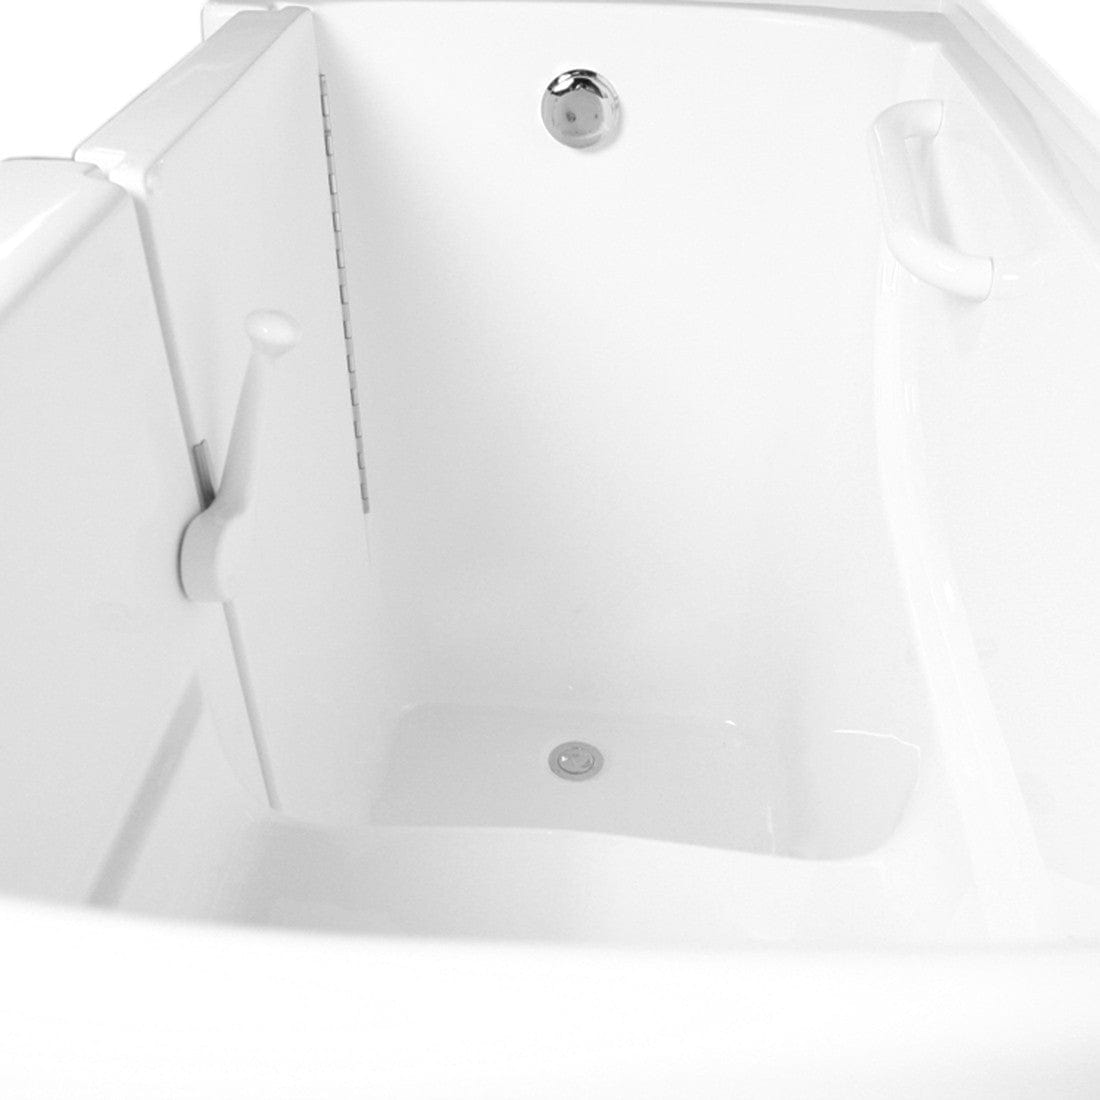 Ariel EZWT-3054 Dual Series Walk-In Tub | EZWT-3054-DUAL-L